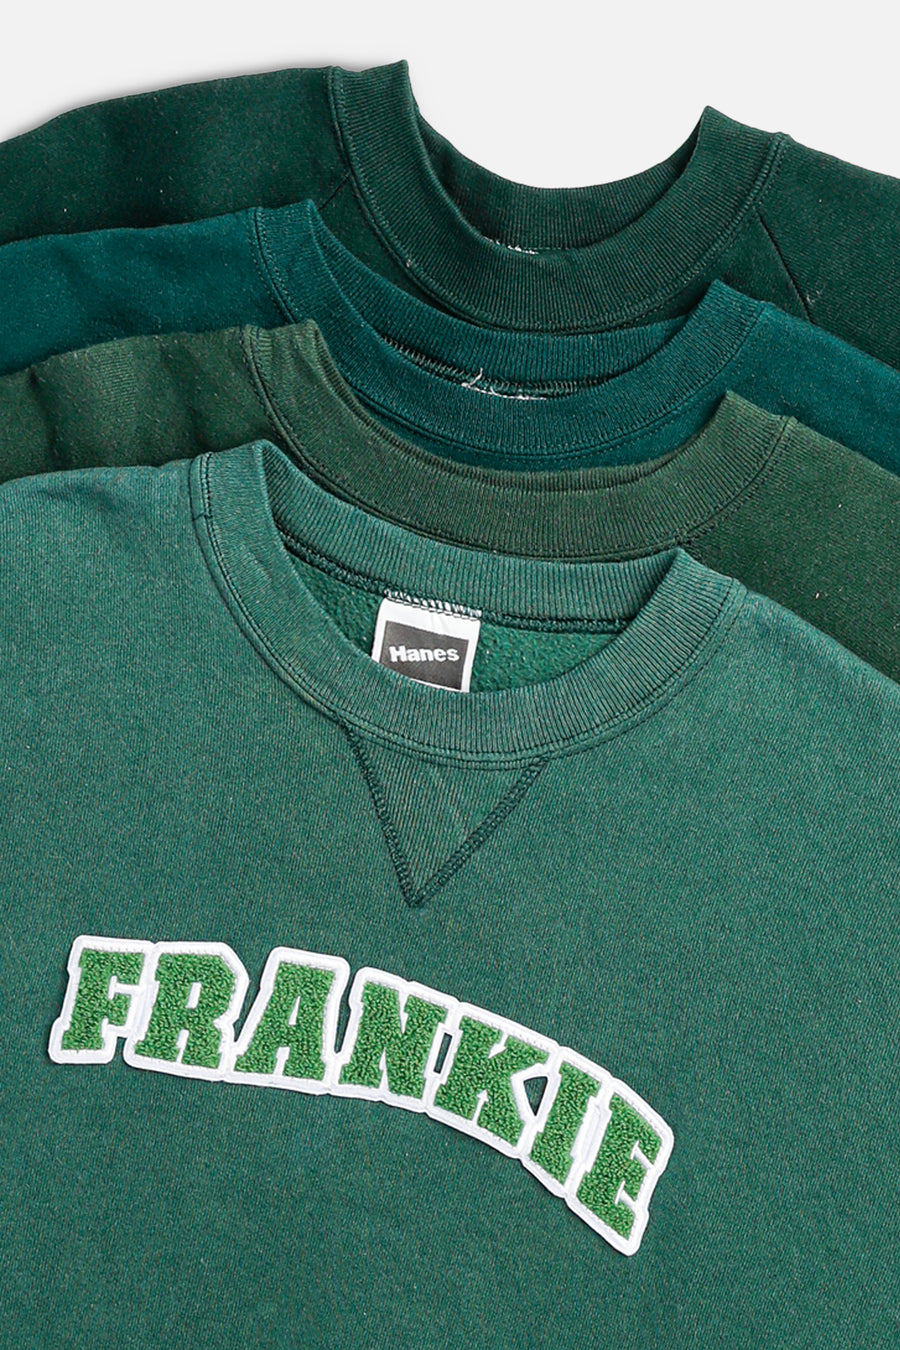 Frankie Upcycled Varsity Sweatshirt - XS, S, M, L, XL, XXL